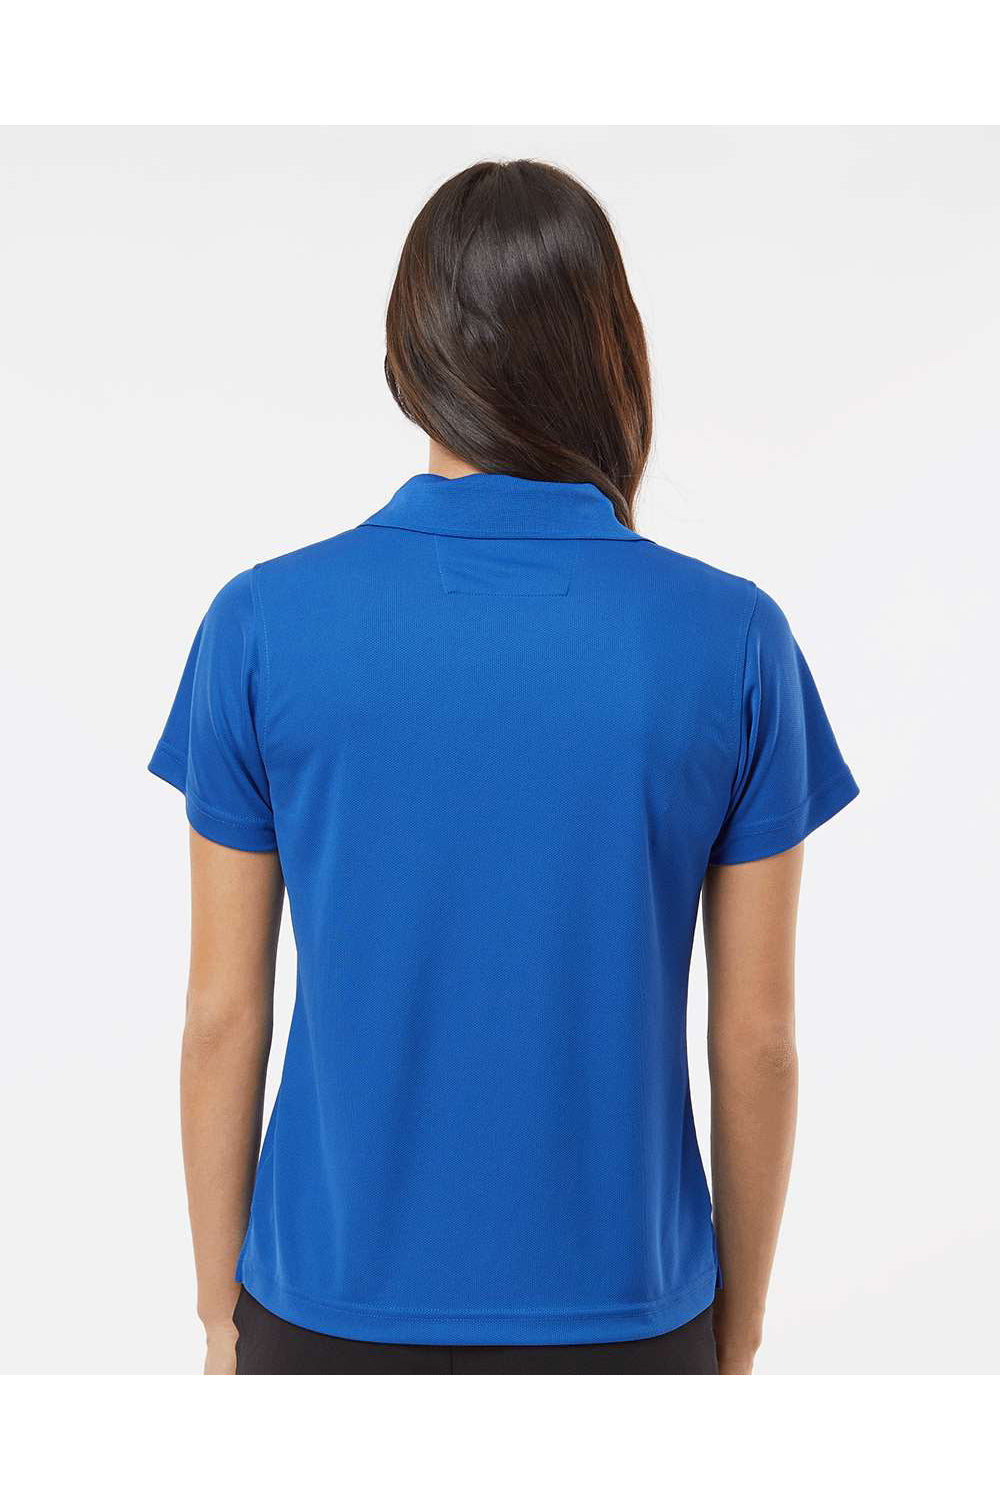 Paragon 104 Womens Saratoga Performance Mini Mesh Short Sleeve Polo Shirt Royal Blue Model Back